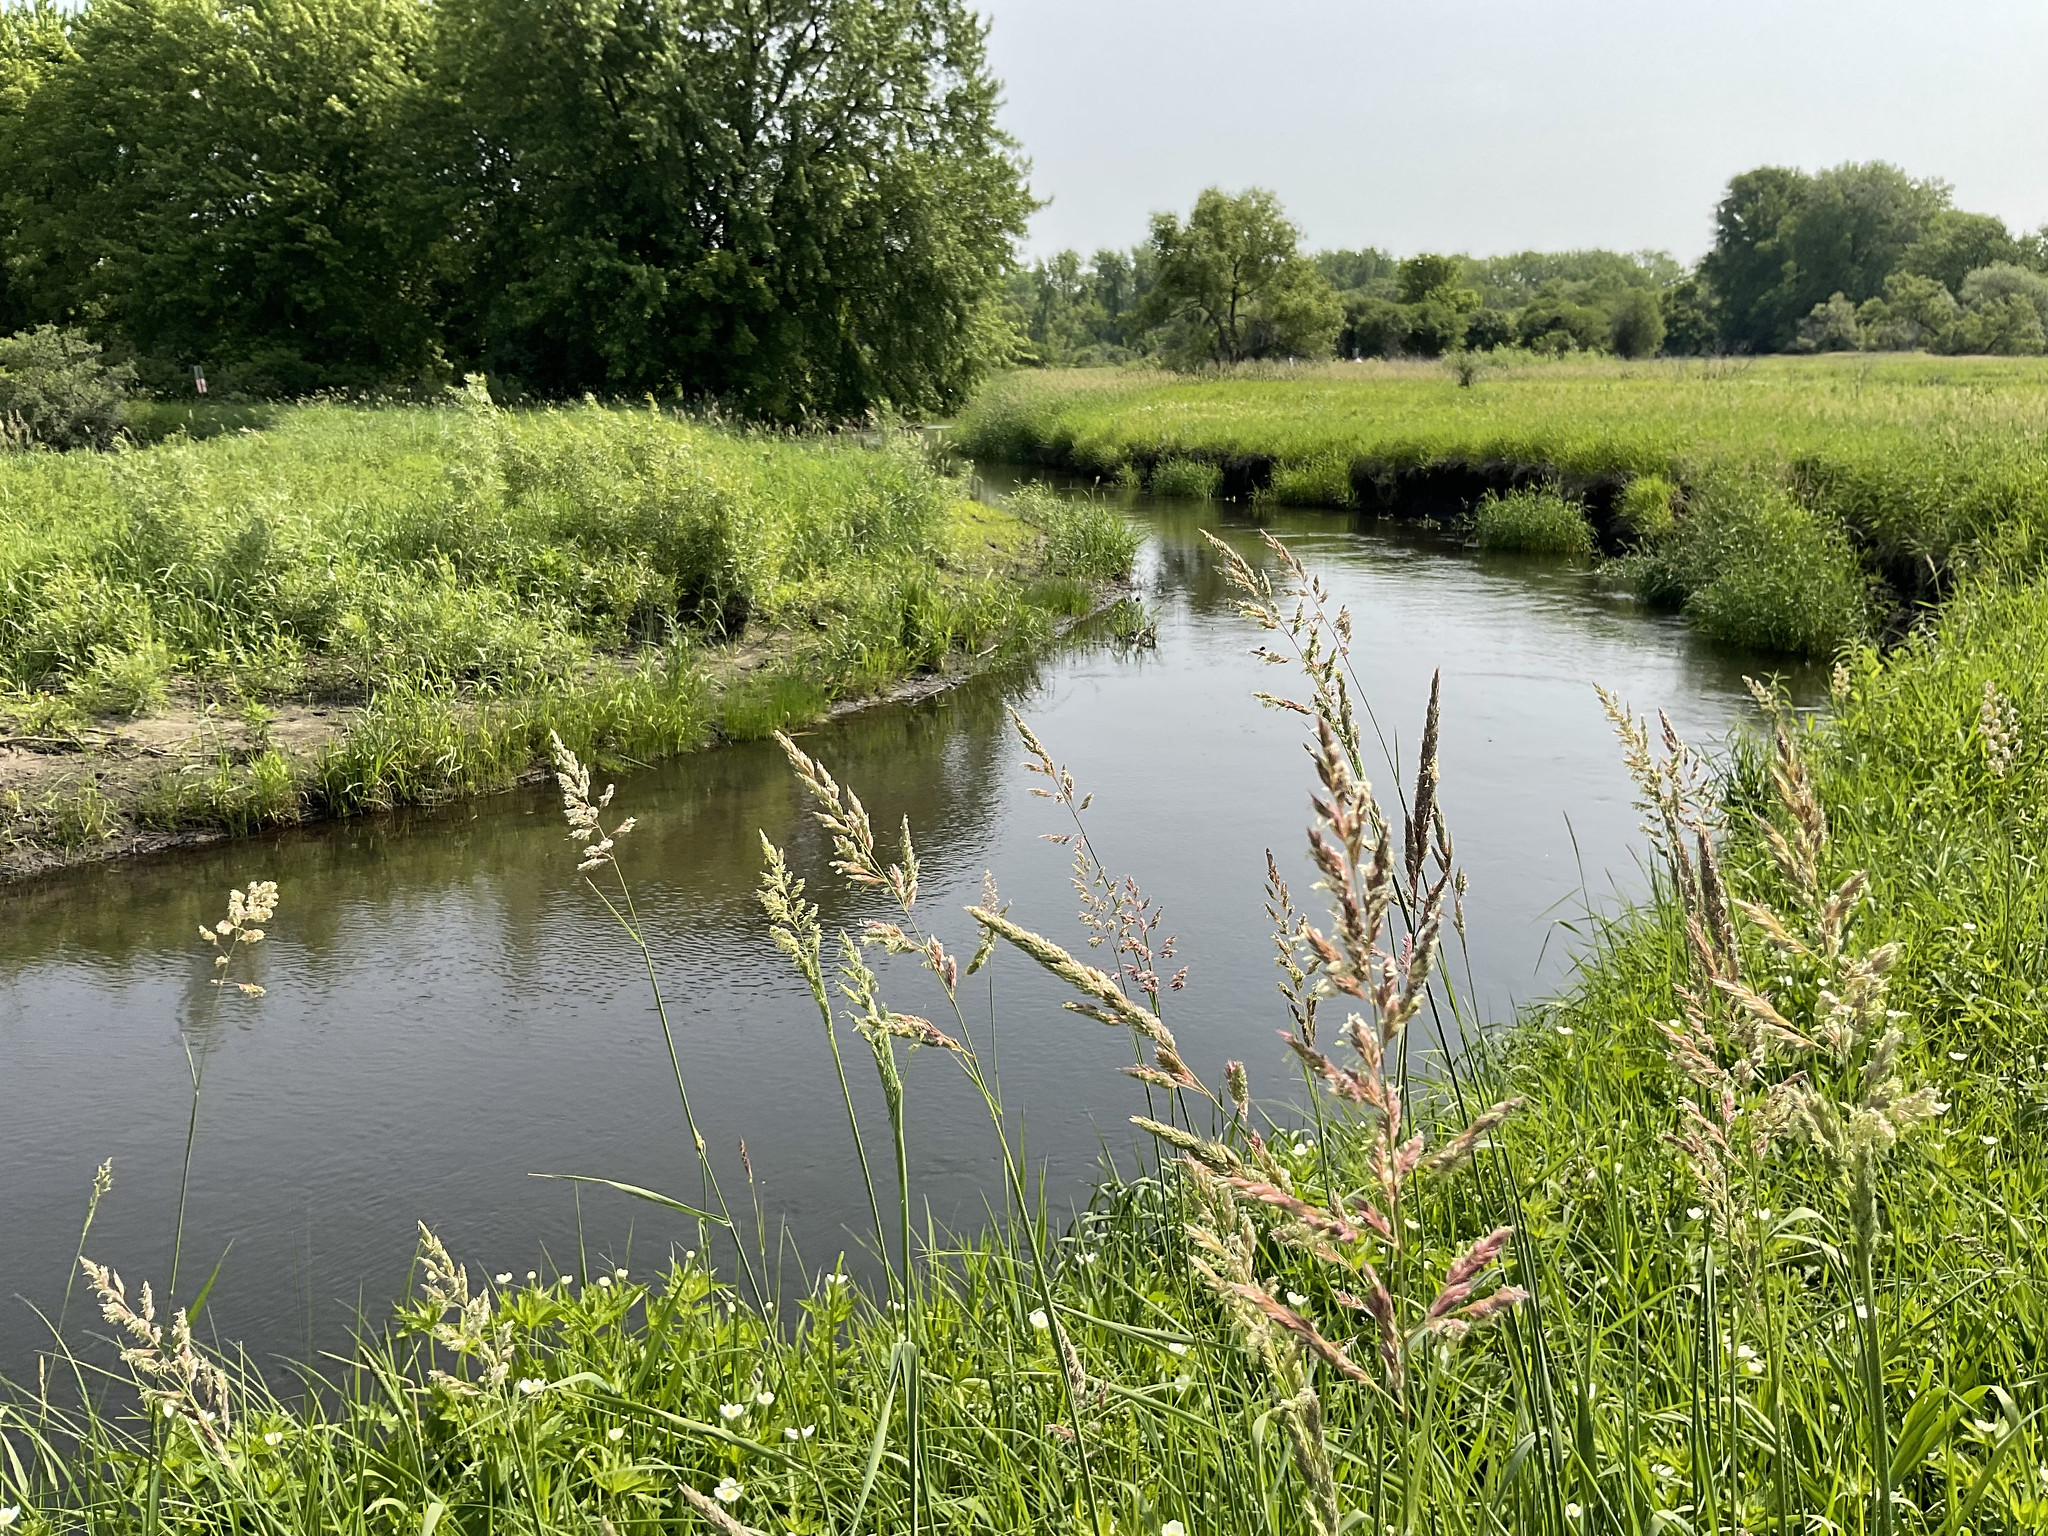 Vermillion River flows through reed canary grass